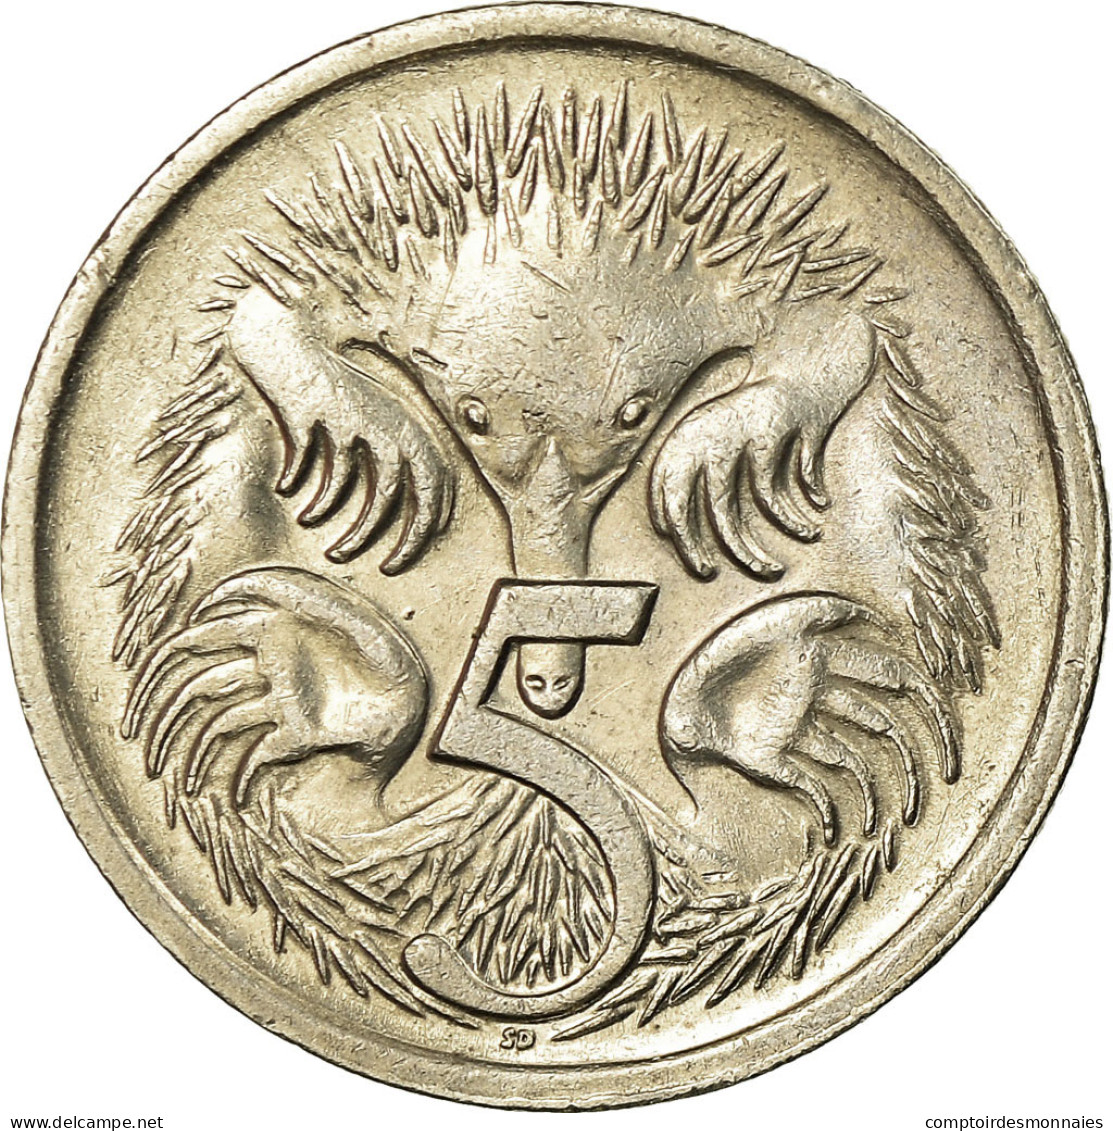 Monnaie, Australie, Elizabeth II, 5 Cents, 1988, Melbourne, TTB, Copper-nickel - Victoria